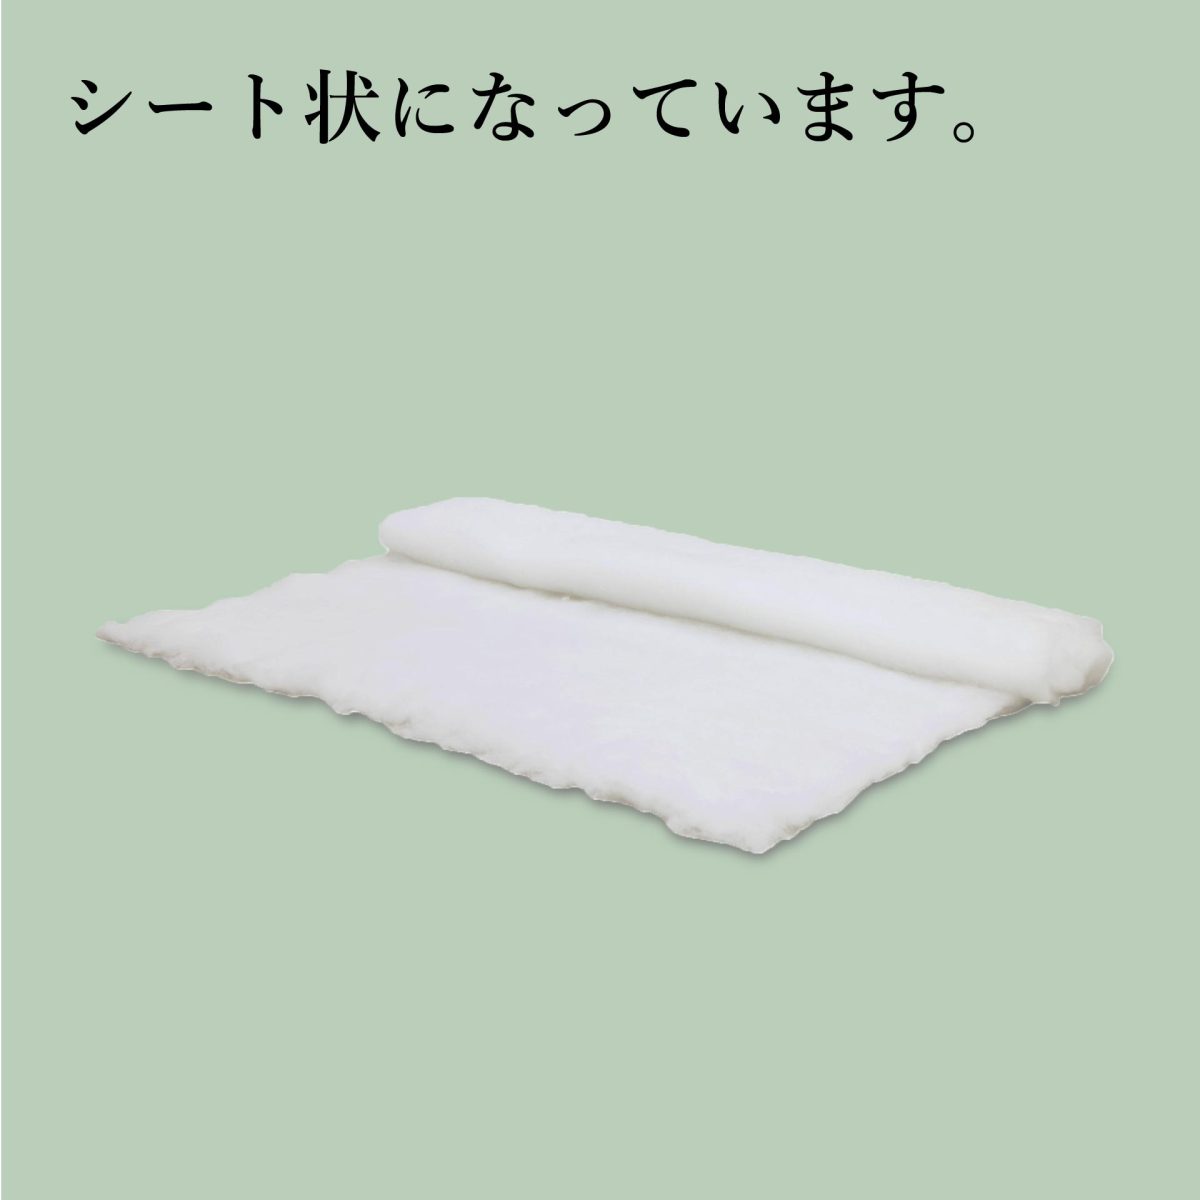  handicrafts cotton 300g made in Japan regular 10 piece supplement for seat type soft toy cushion handicrafts cotton plant 